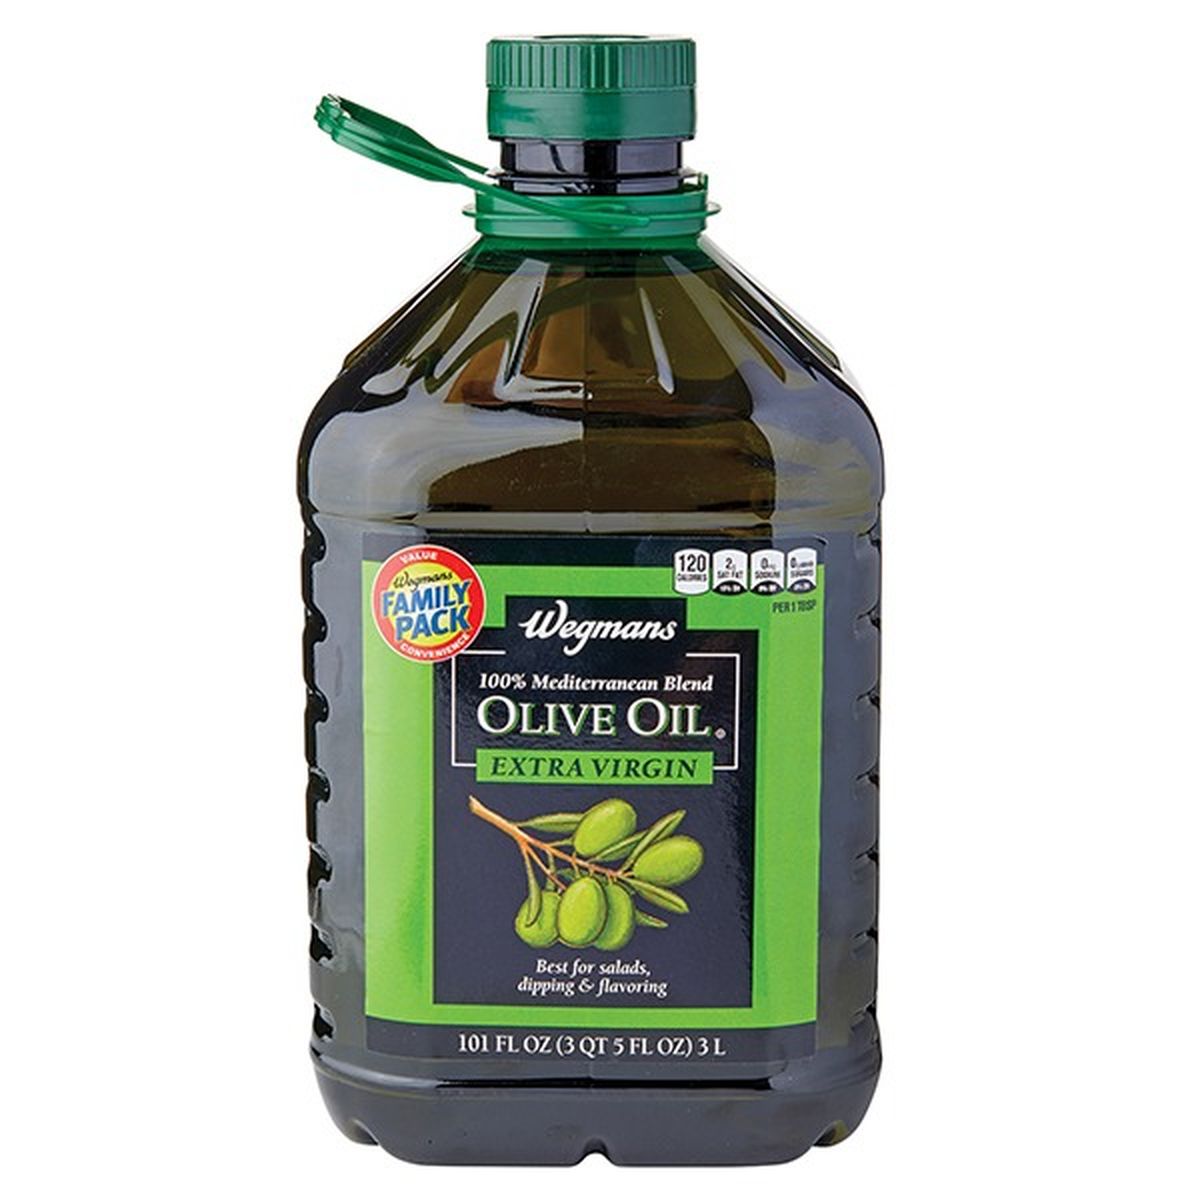 Calories in Wegmans Mediterranean Blend Extra Virgin Olive Oil, FAMILY PACK